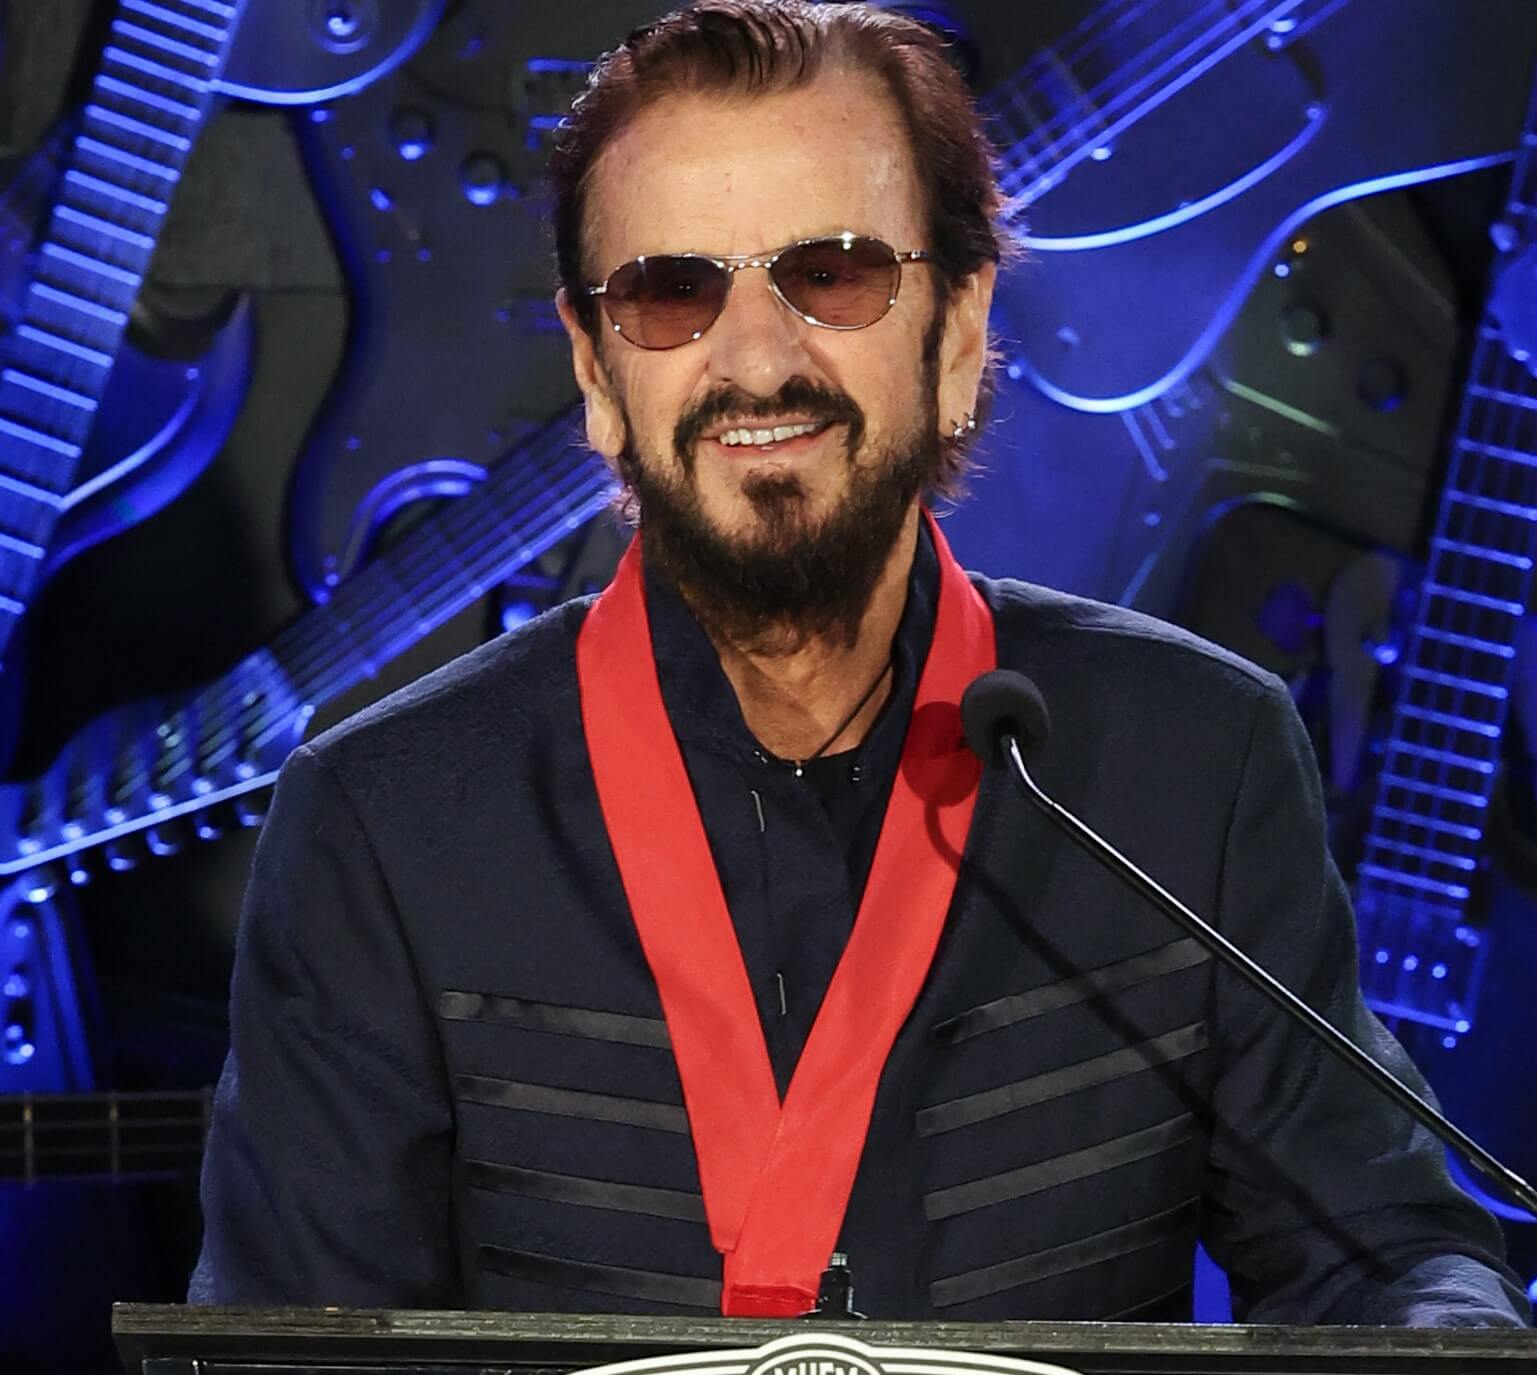 The Beatles' Ringo Starr wearing sunglasses